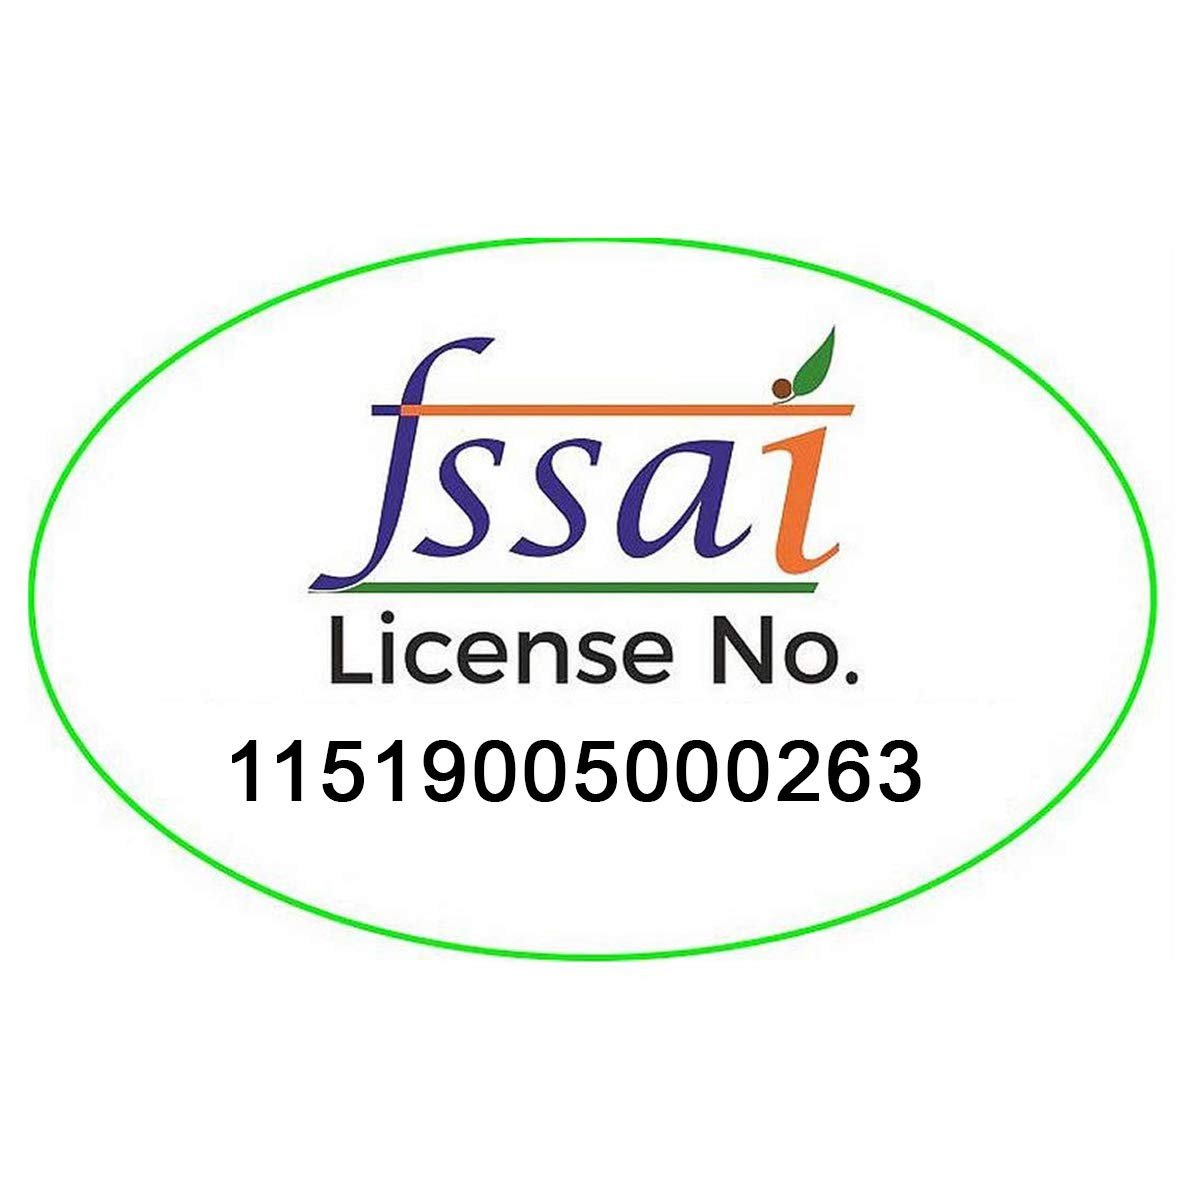 fssai license registration - EAT Anytime